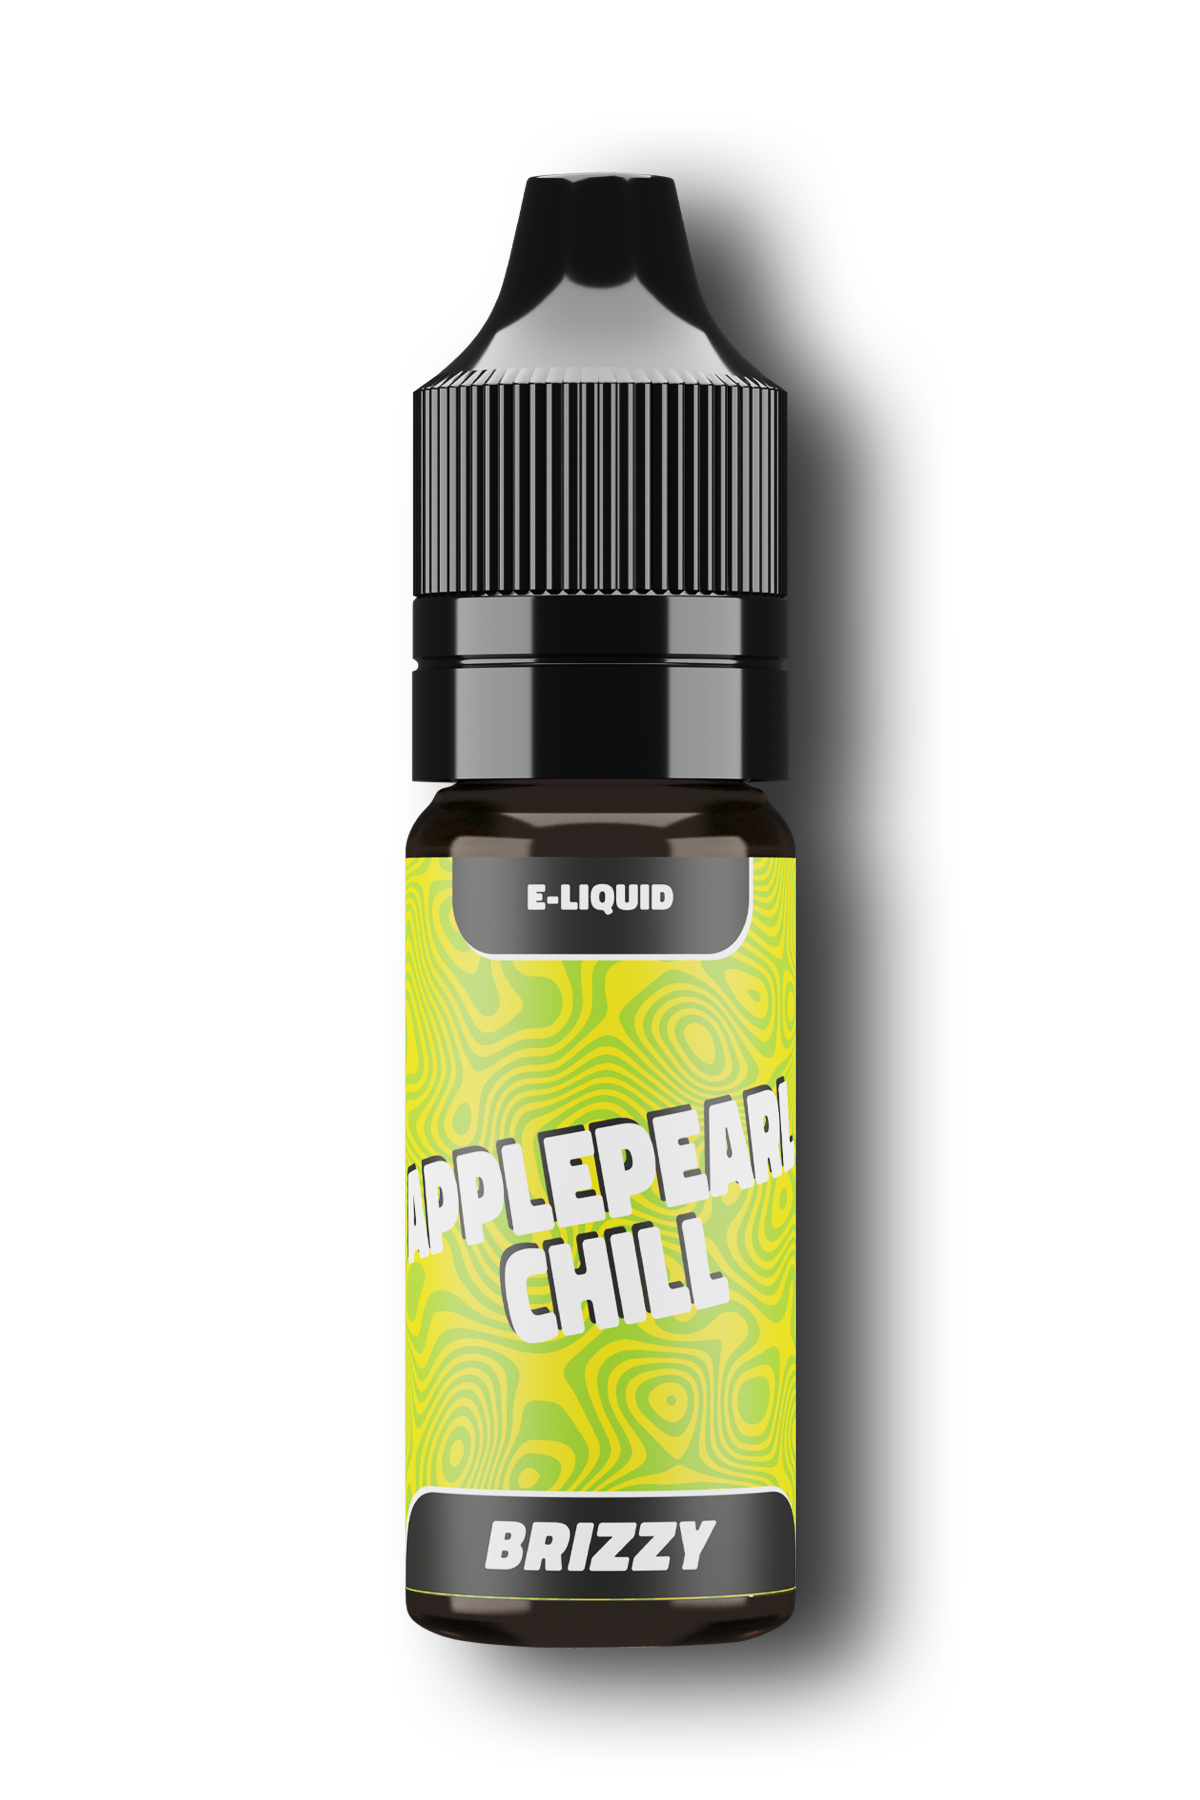 E-liquid - Brizzy Applepearl Chill 20mg/ml